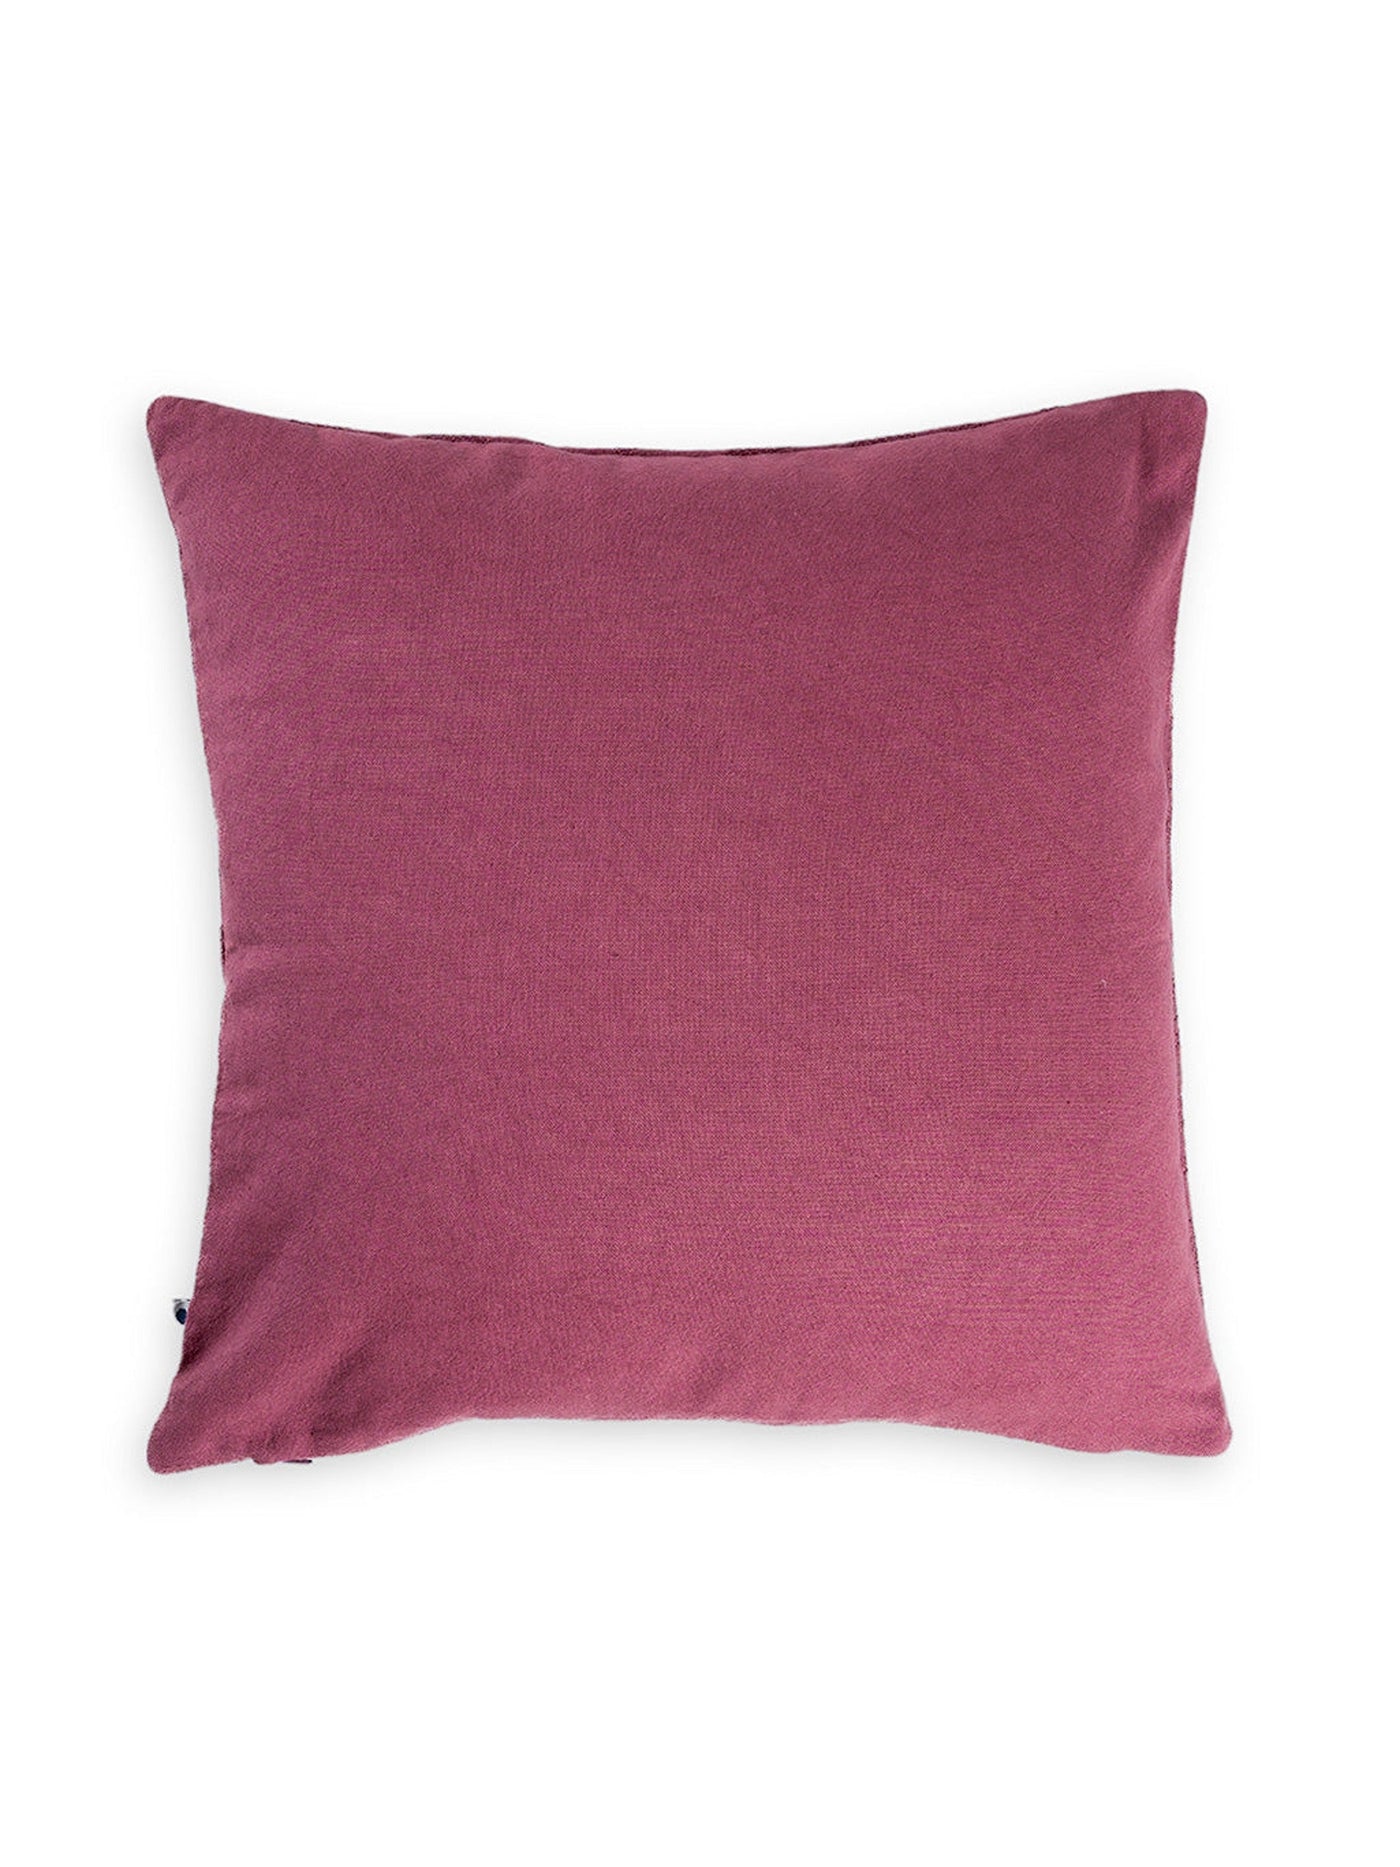 Cushion Cover - Rosebud Floral